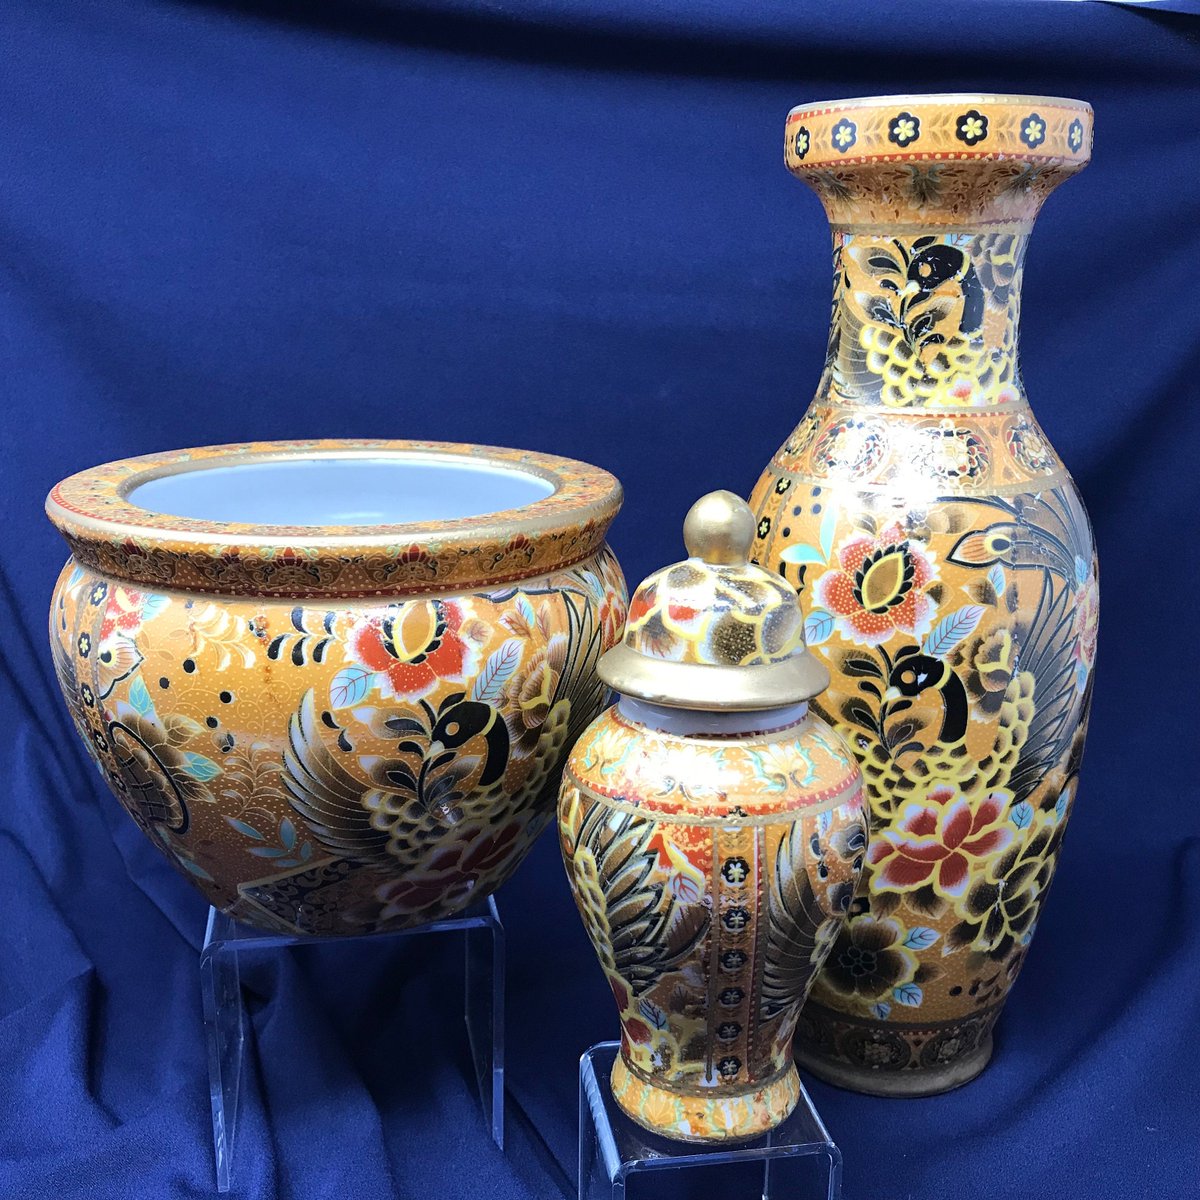 Vintage Pottery, African Style Decor etsy.me/2Y4iEgj #art #gold #gingerjar #tallvase #smallvase #orientalset #goldpeacock #safaridecor #uniquegift